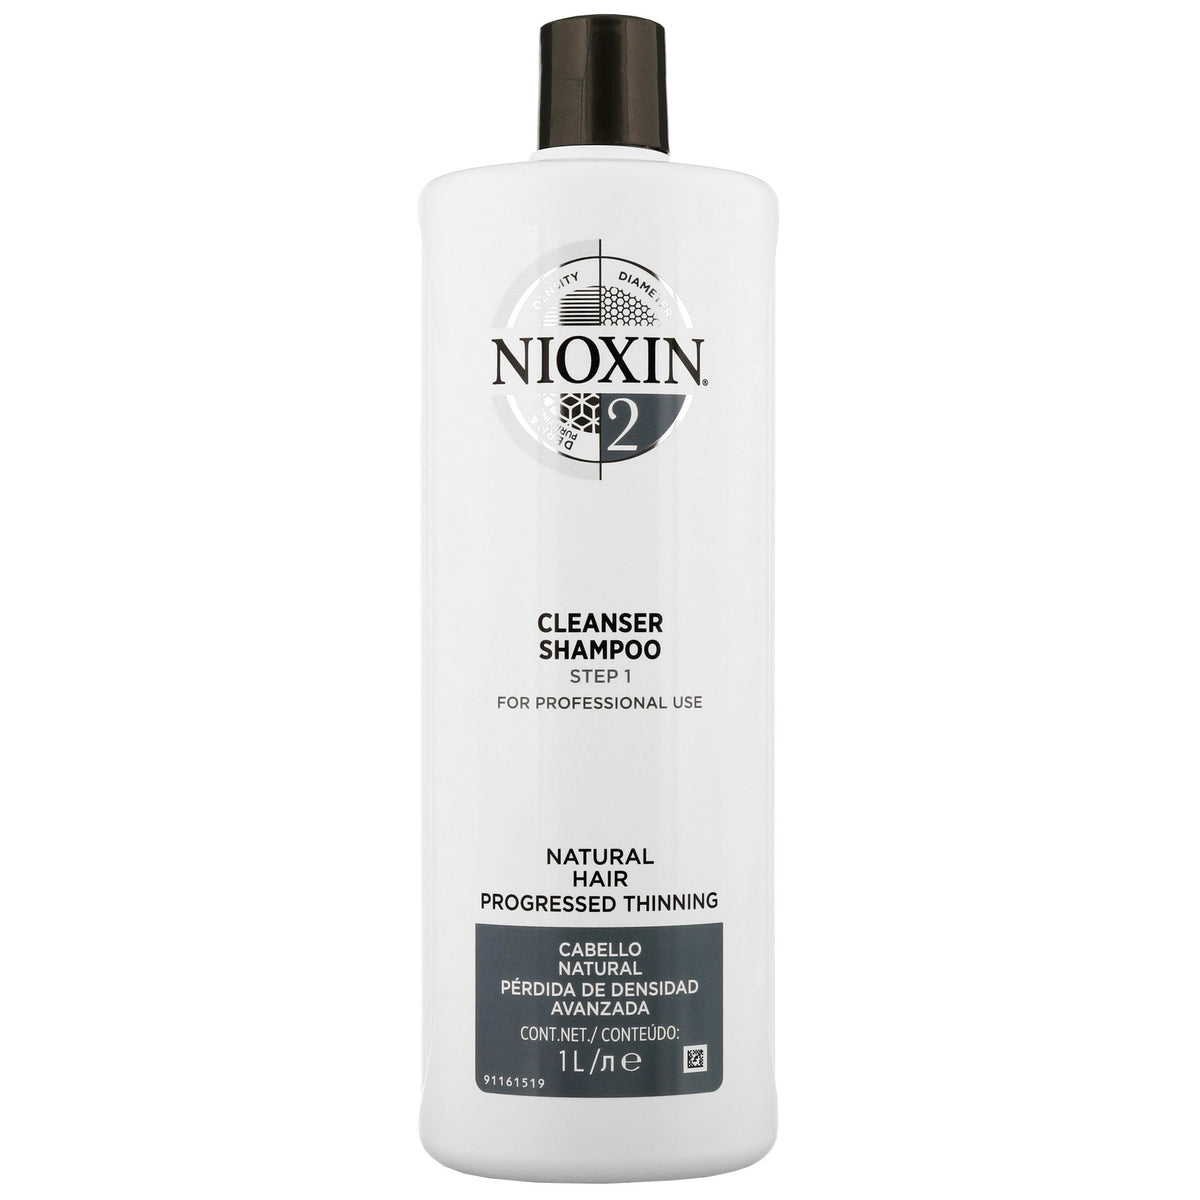 Nioxin 2 Cleanser Shampoo - Natural Hair Progressed Thinning